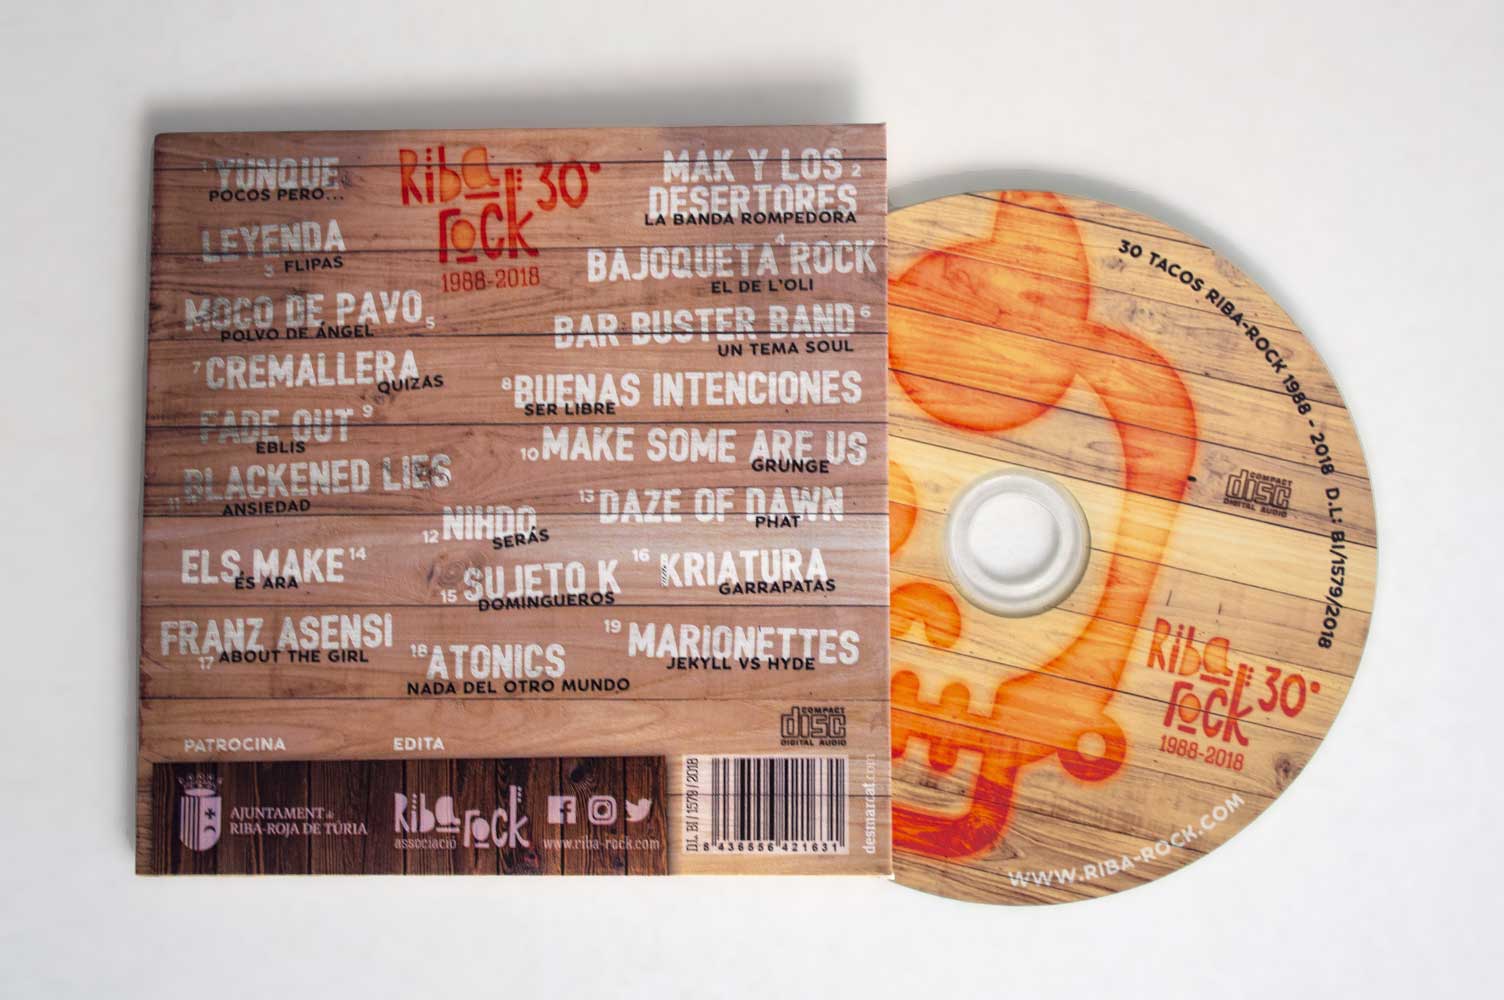 Diseño CD grupos de rock Riba-rock 30 tacos contraportada